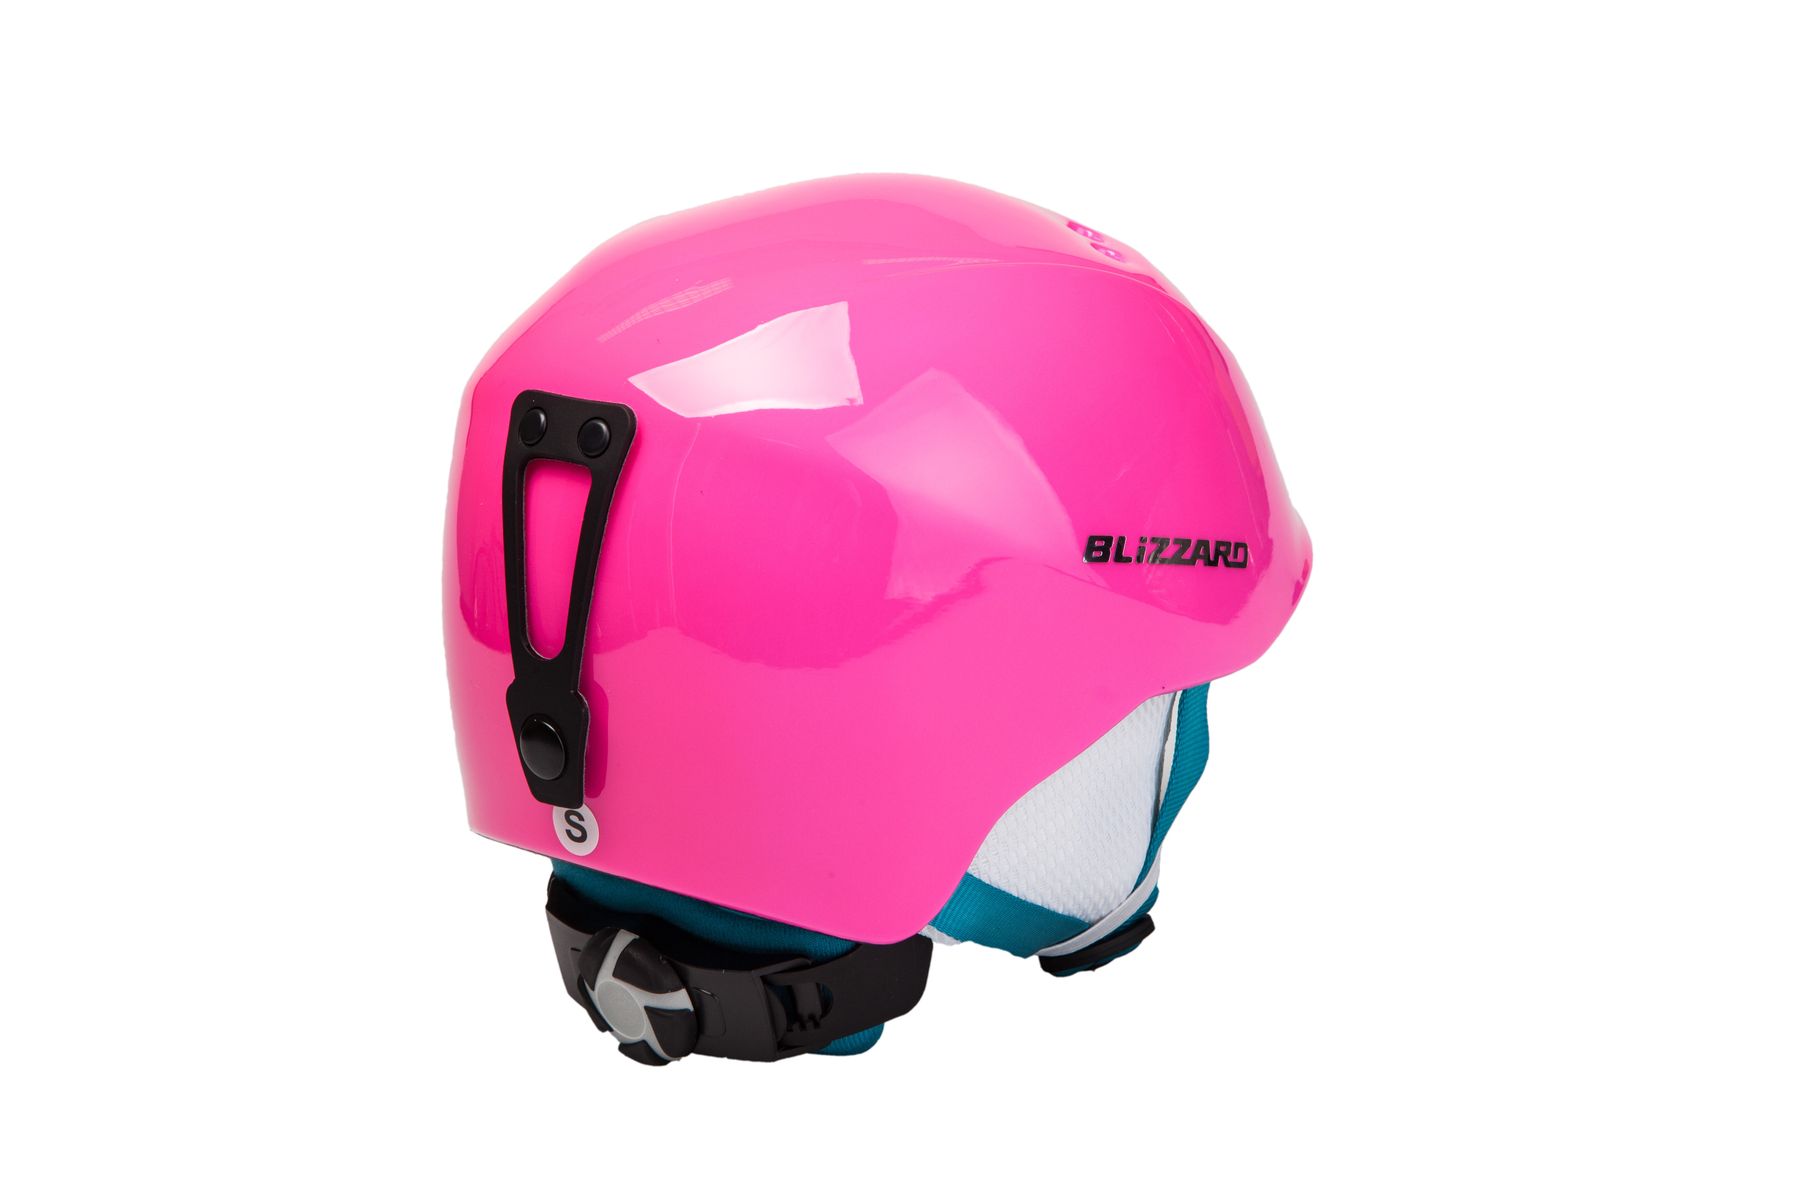 SIGNAL ski helmet, pink